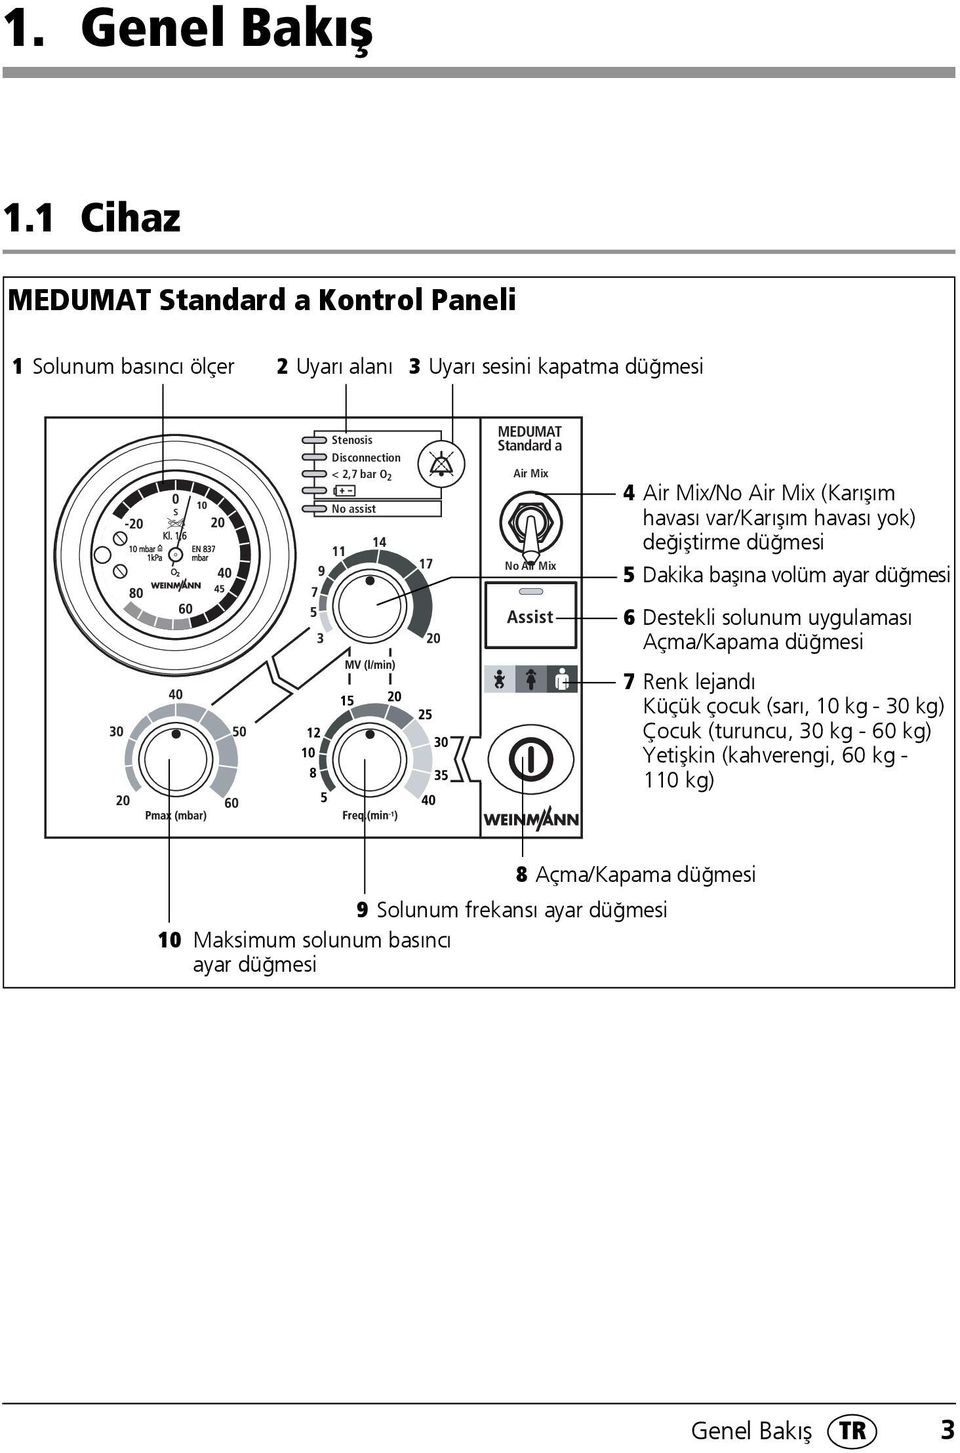 assist MEDUMAT Standard a Air Mix No Air Mix 4 Air Mix/No Air Mix (Karışım havası var/karışım havası yok) değiştirme düğmesi 5 Dakika başına volüm ayar